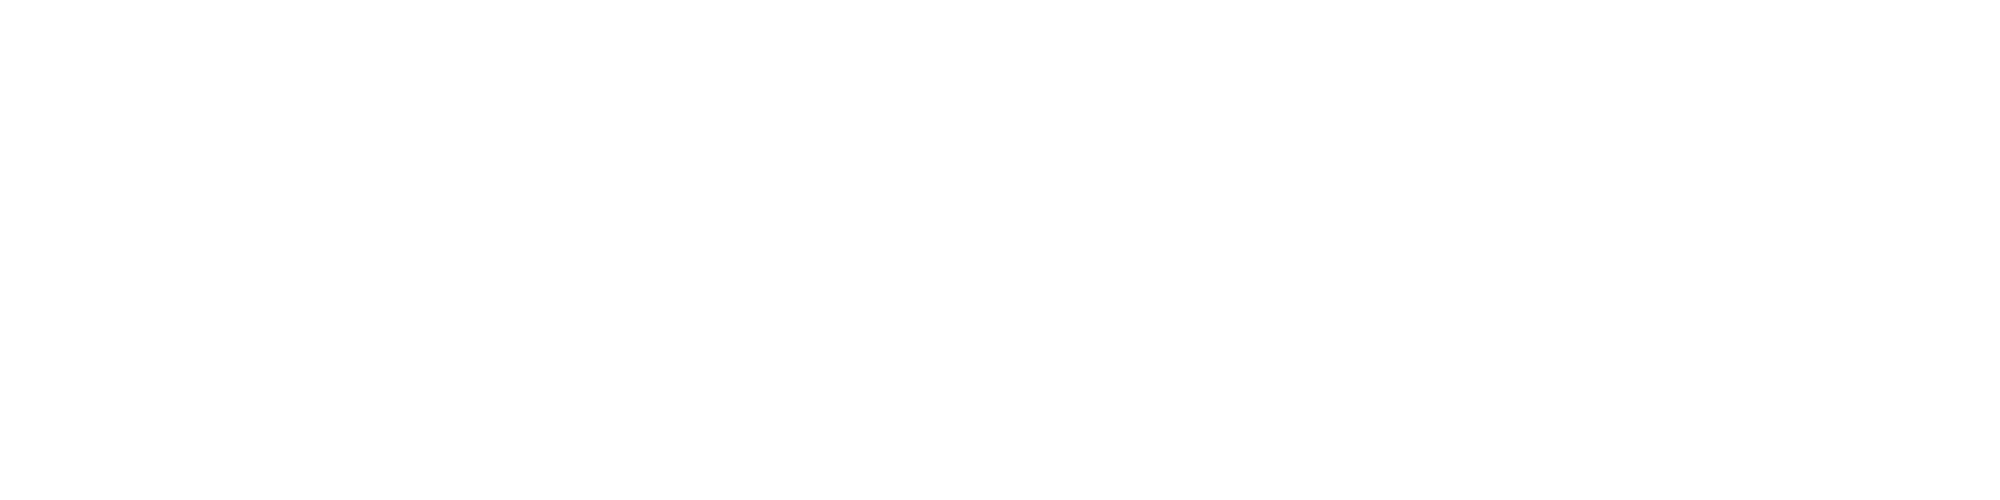 Faciliter bâtiment Cinq max mara logo png équipage Espagnol cahier de texte